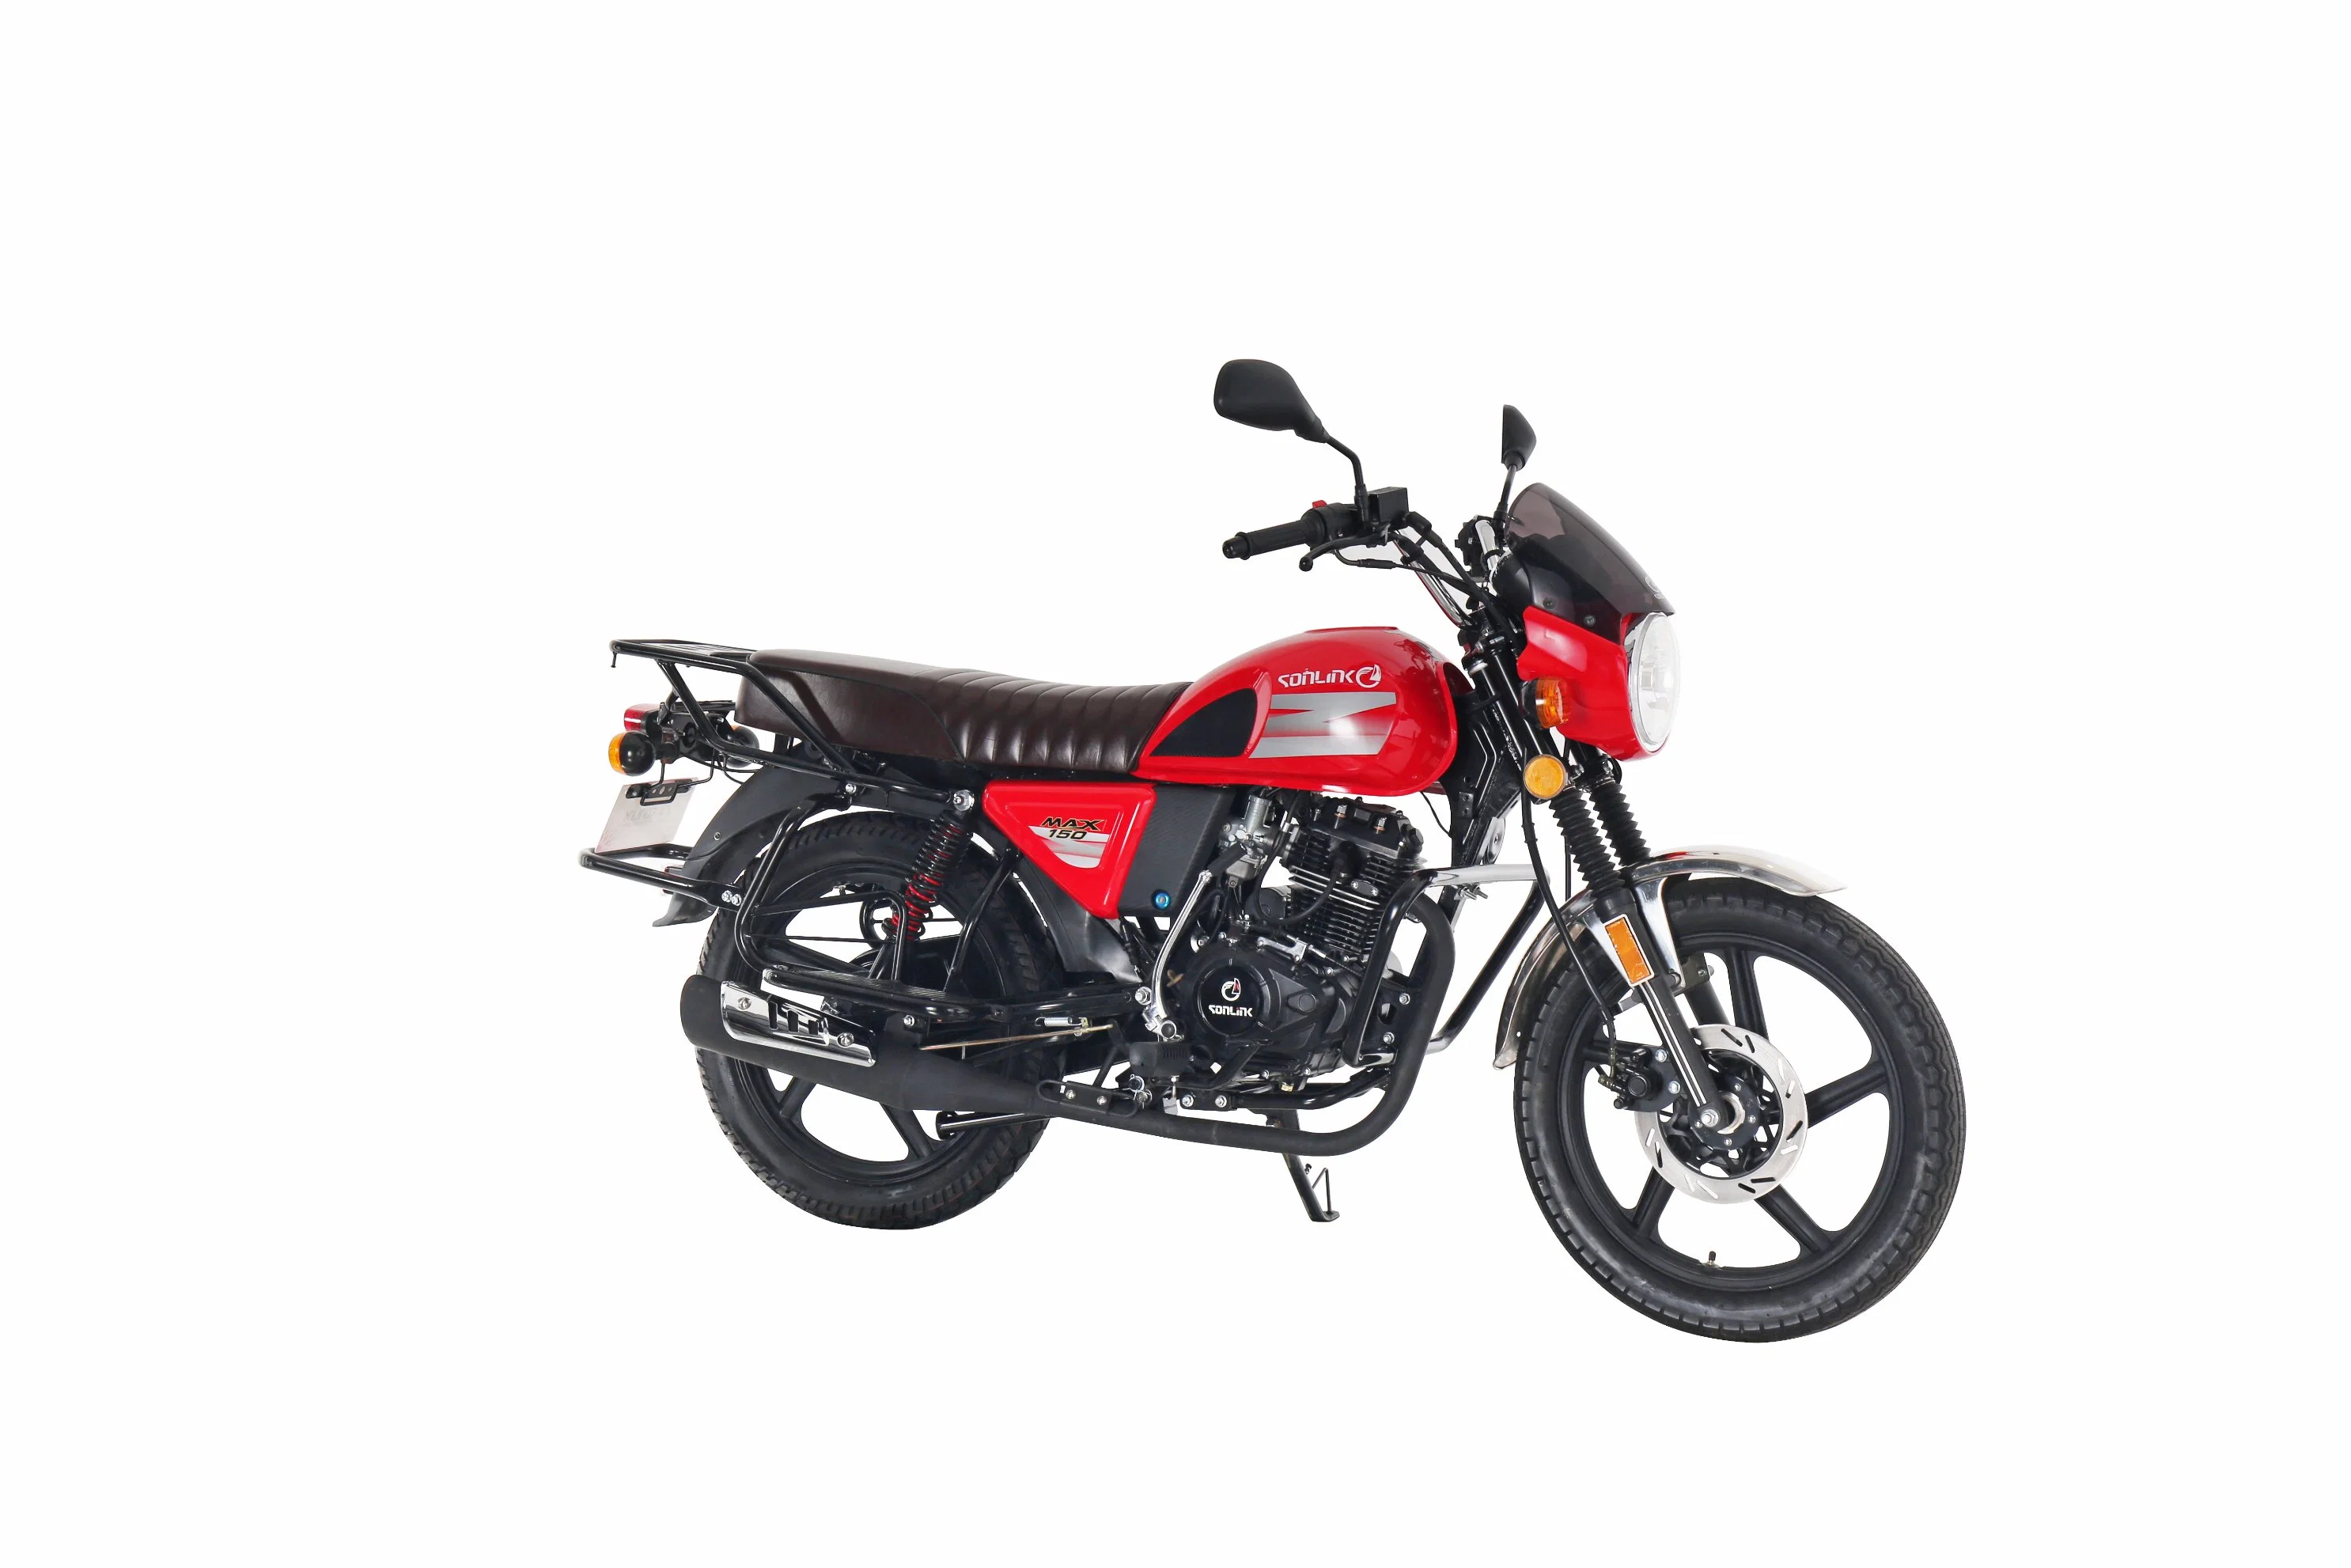 Loisir Moto 150cc Motorcycle / 200cc Motorcycle / 150cc Dirt Bike / Electric Bike